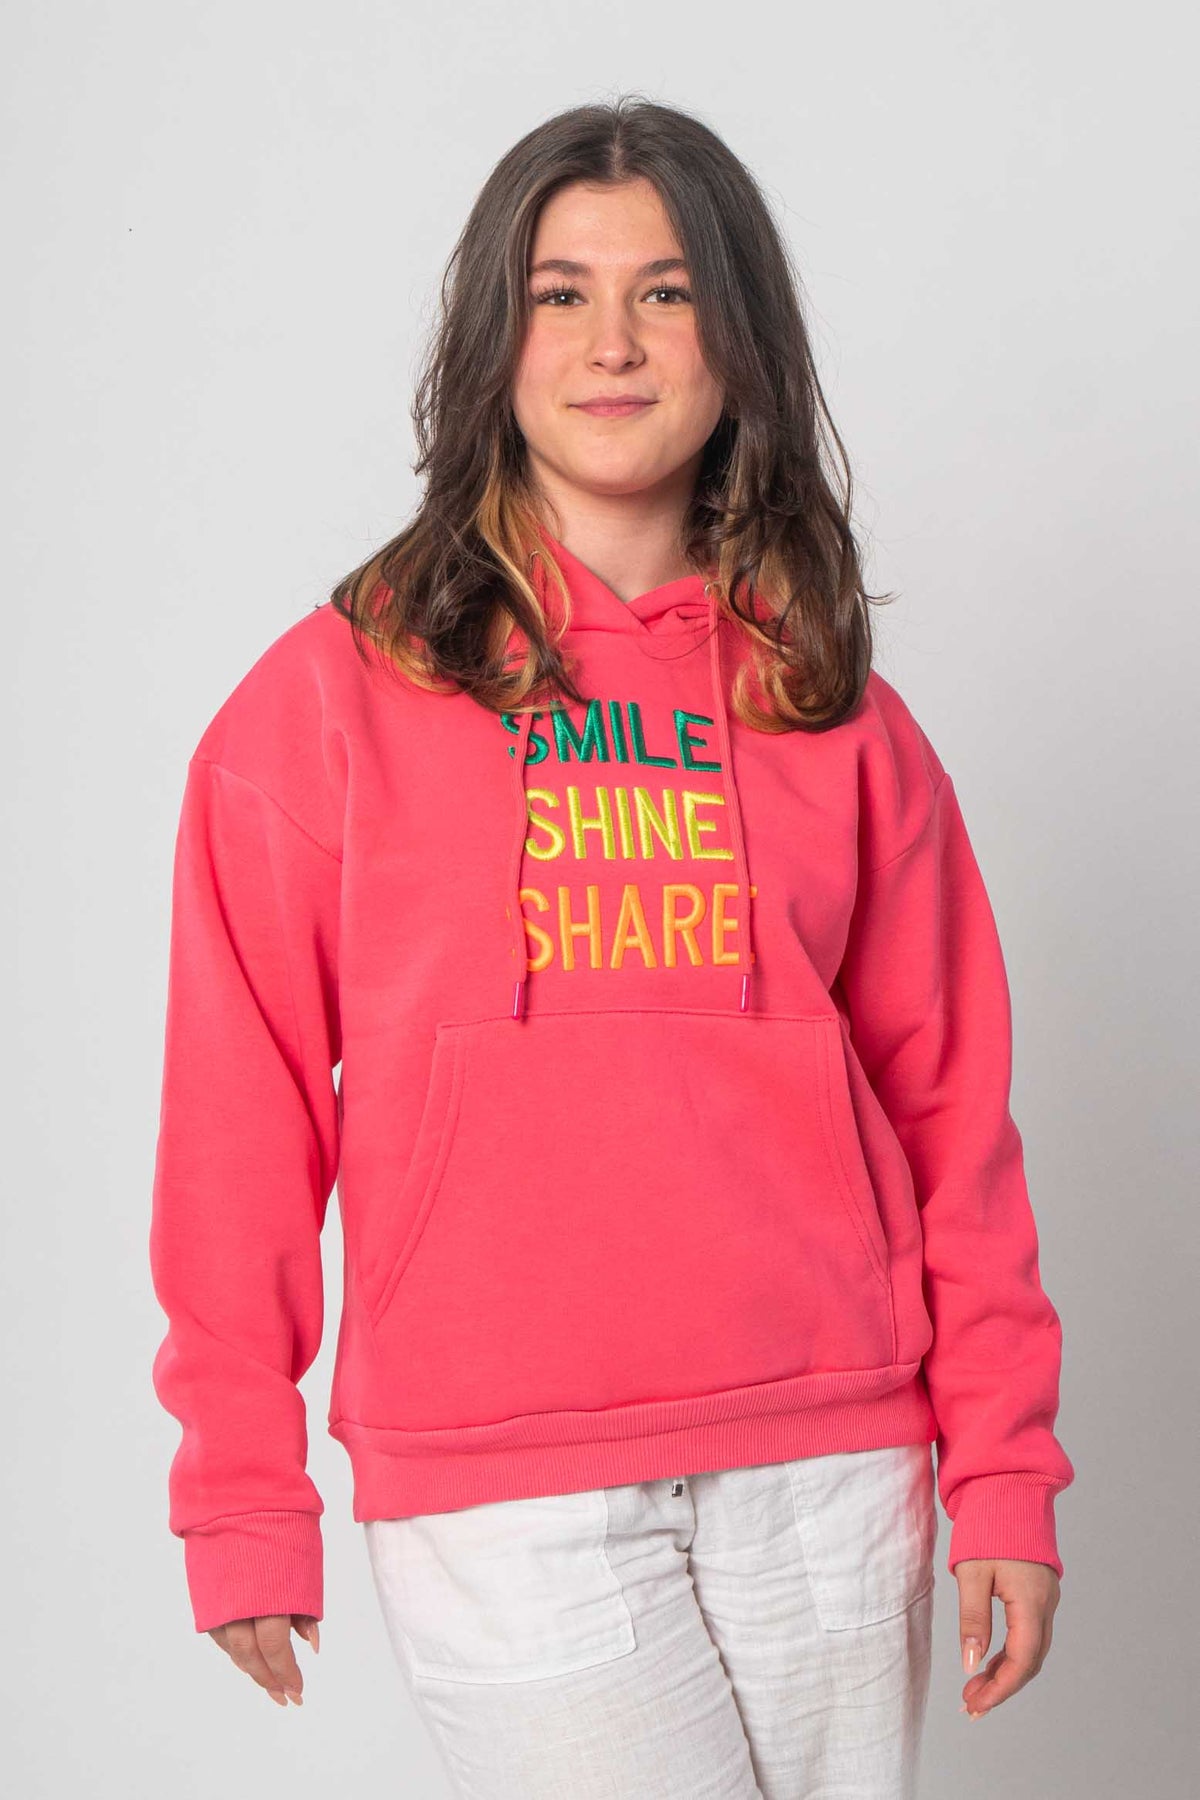 Hoodie/Sweatshirt "Smile - Shine - Share" - Pink/Neon